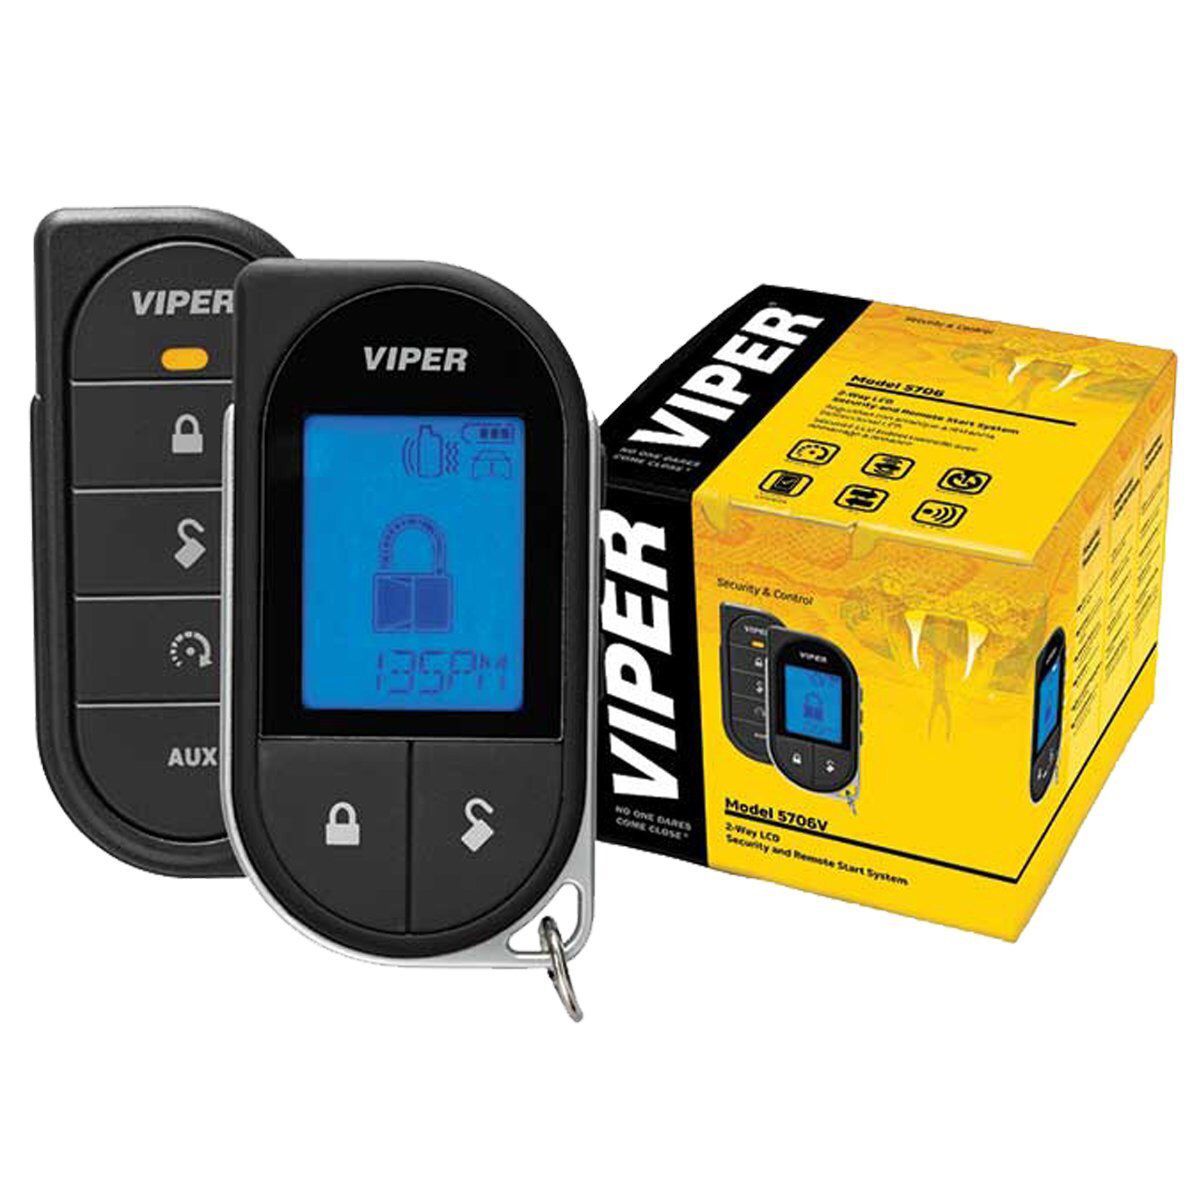 Viper 5706v Alarm and Remote Start